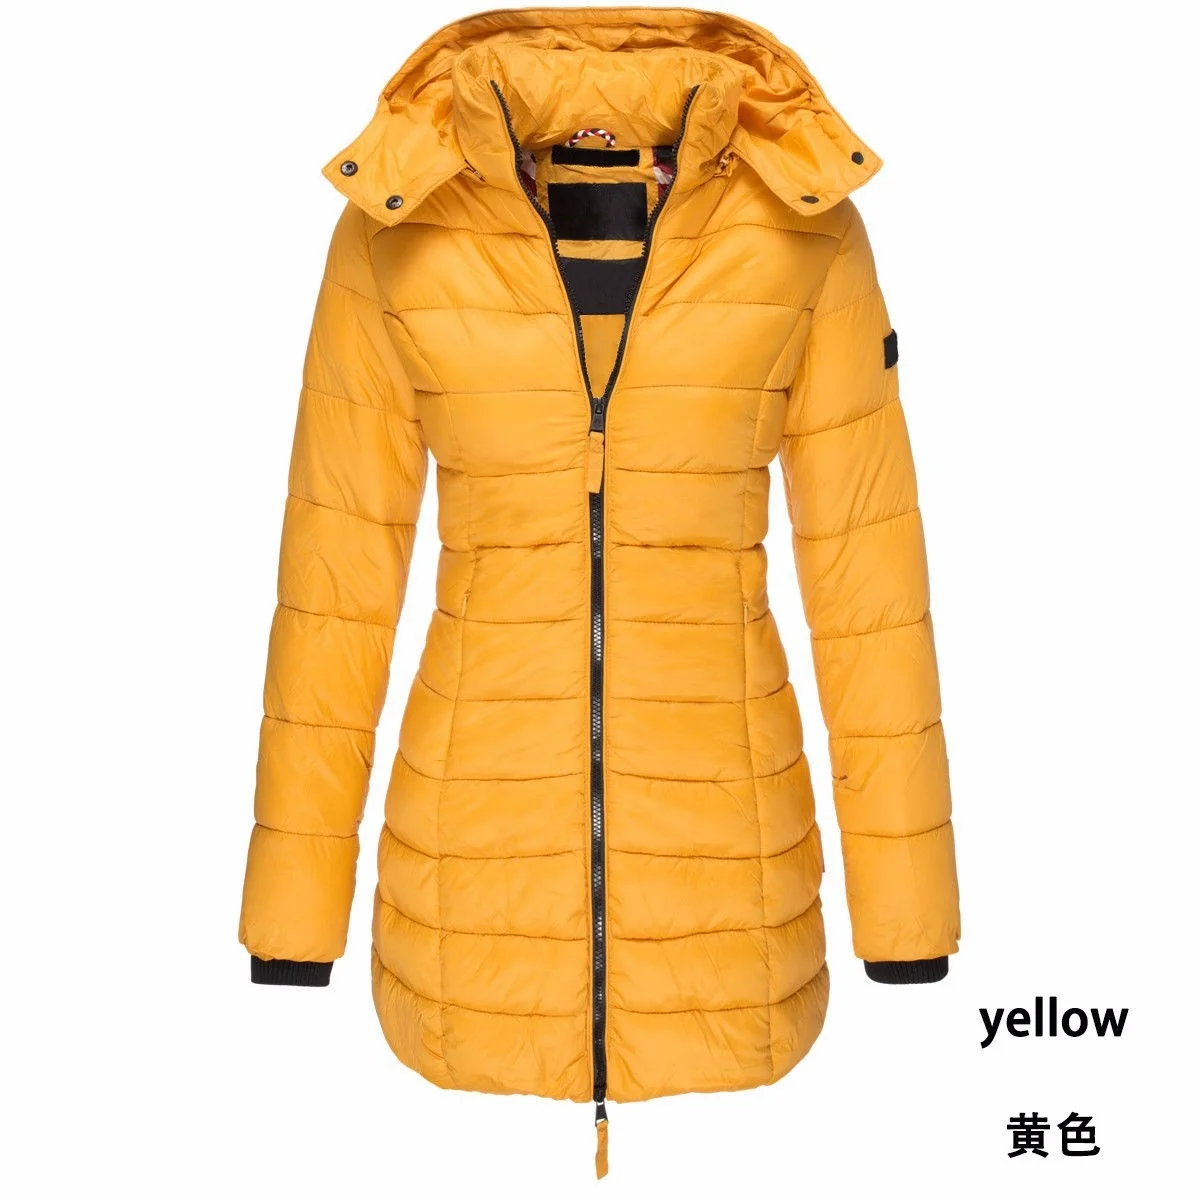 Avoogue Women's Long Raincoat with Hood Outdoor Lightweight Windbreaker Rain Jacket Waterproof